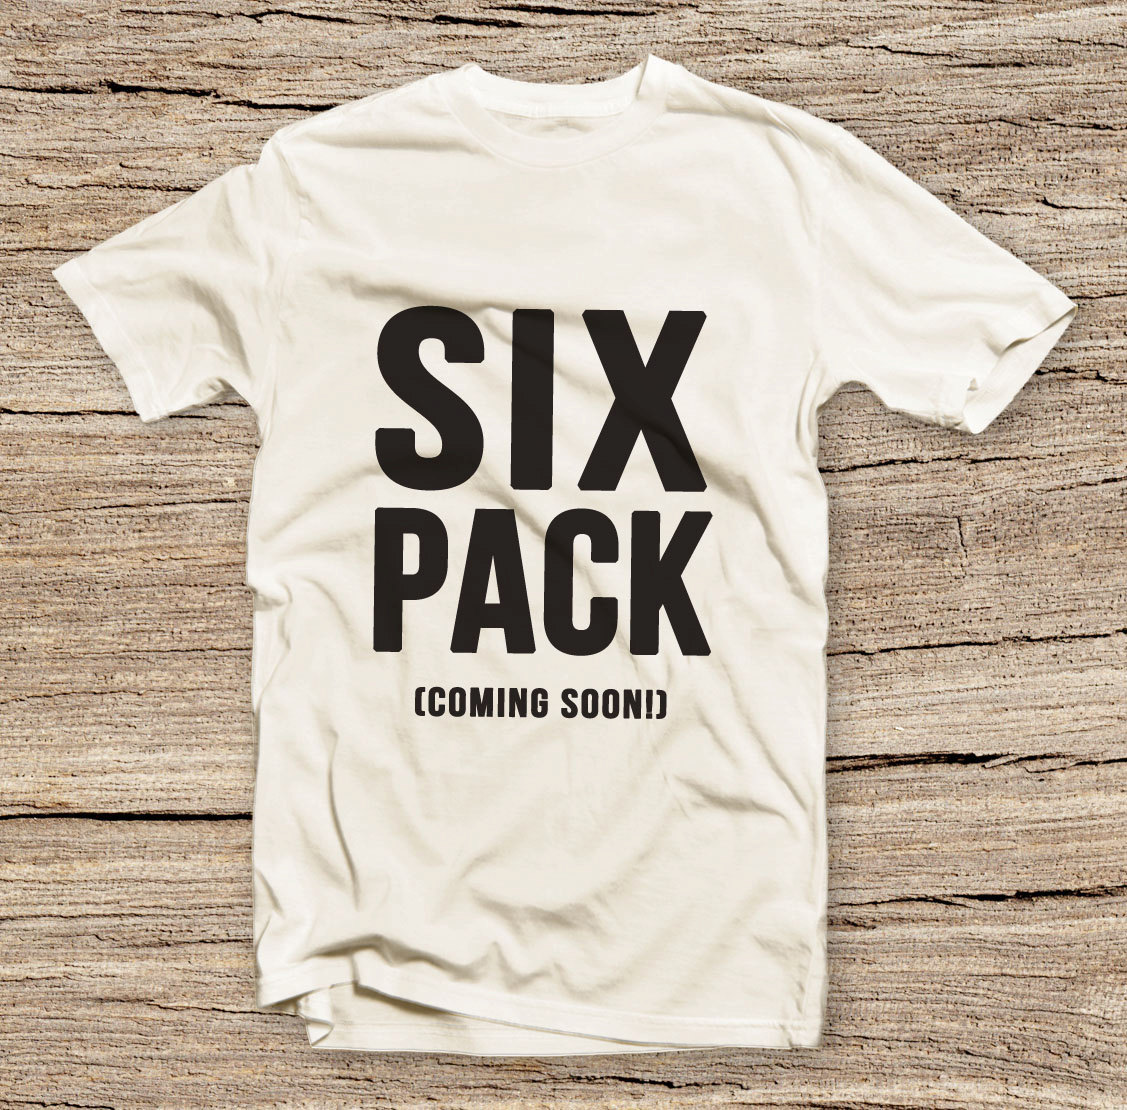 Pts-191 Six Pack Coming Soon T-shirt, Fashion Shirts, Funny T-shirt, Cute T-shirts, Cool T-shirts